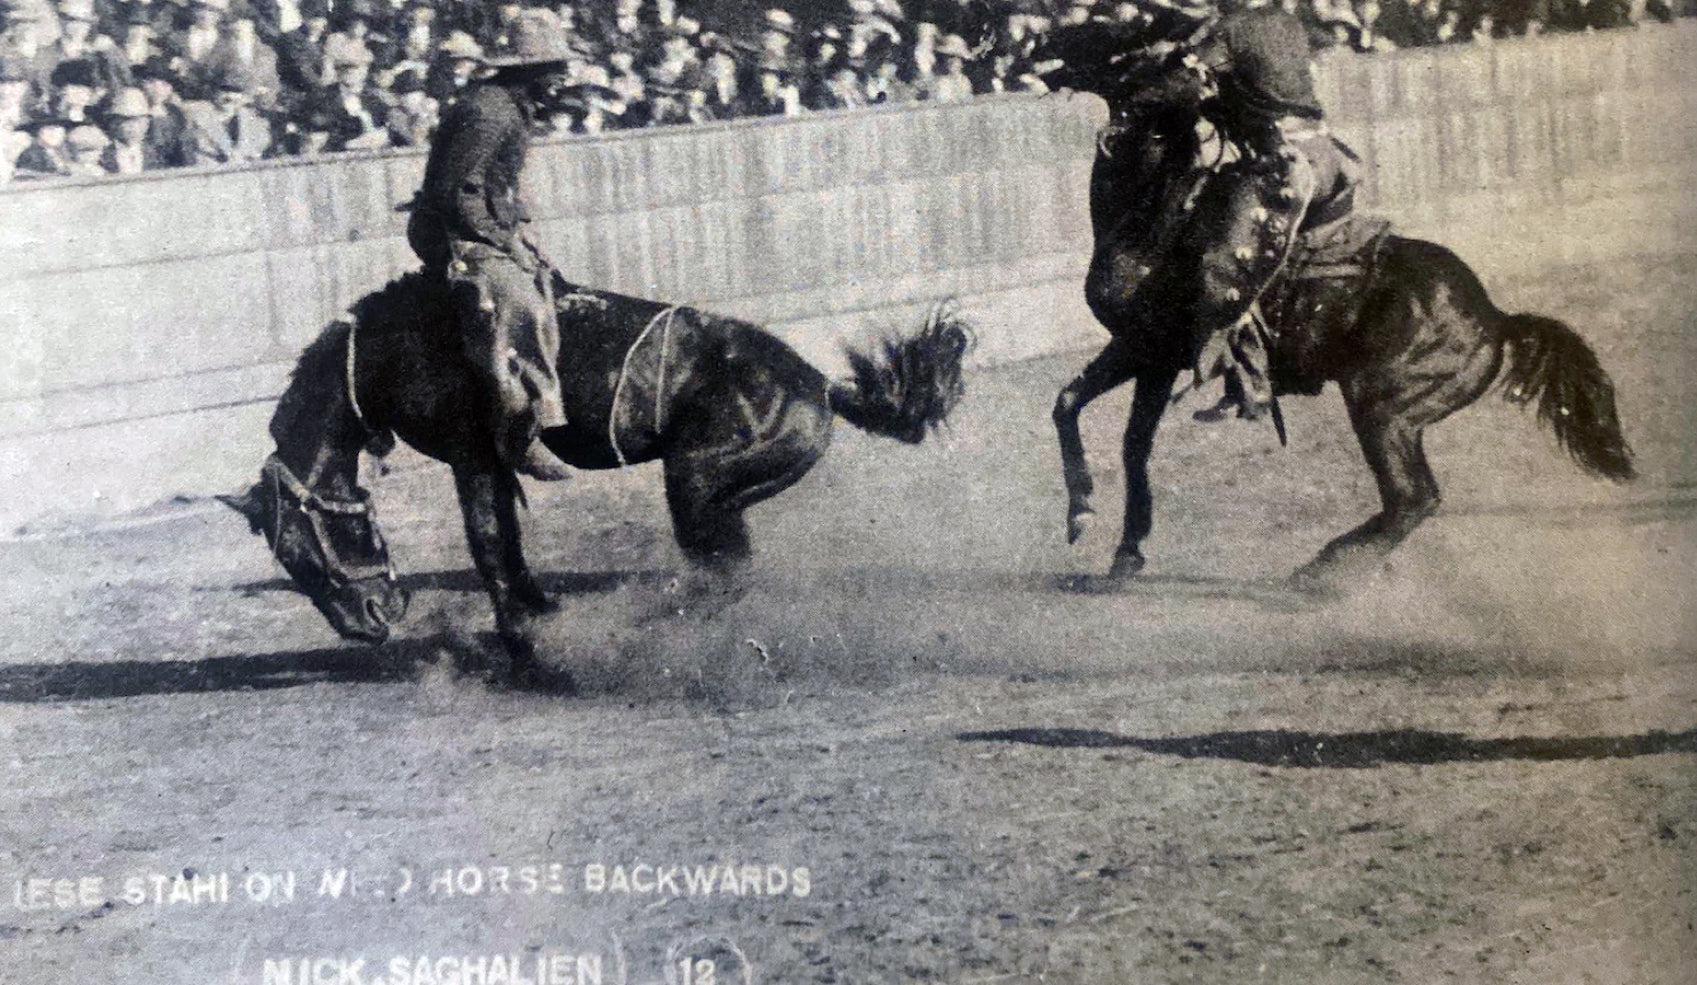 Jesse Stahl Riding Backwards on a Horse